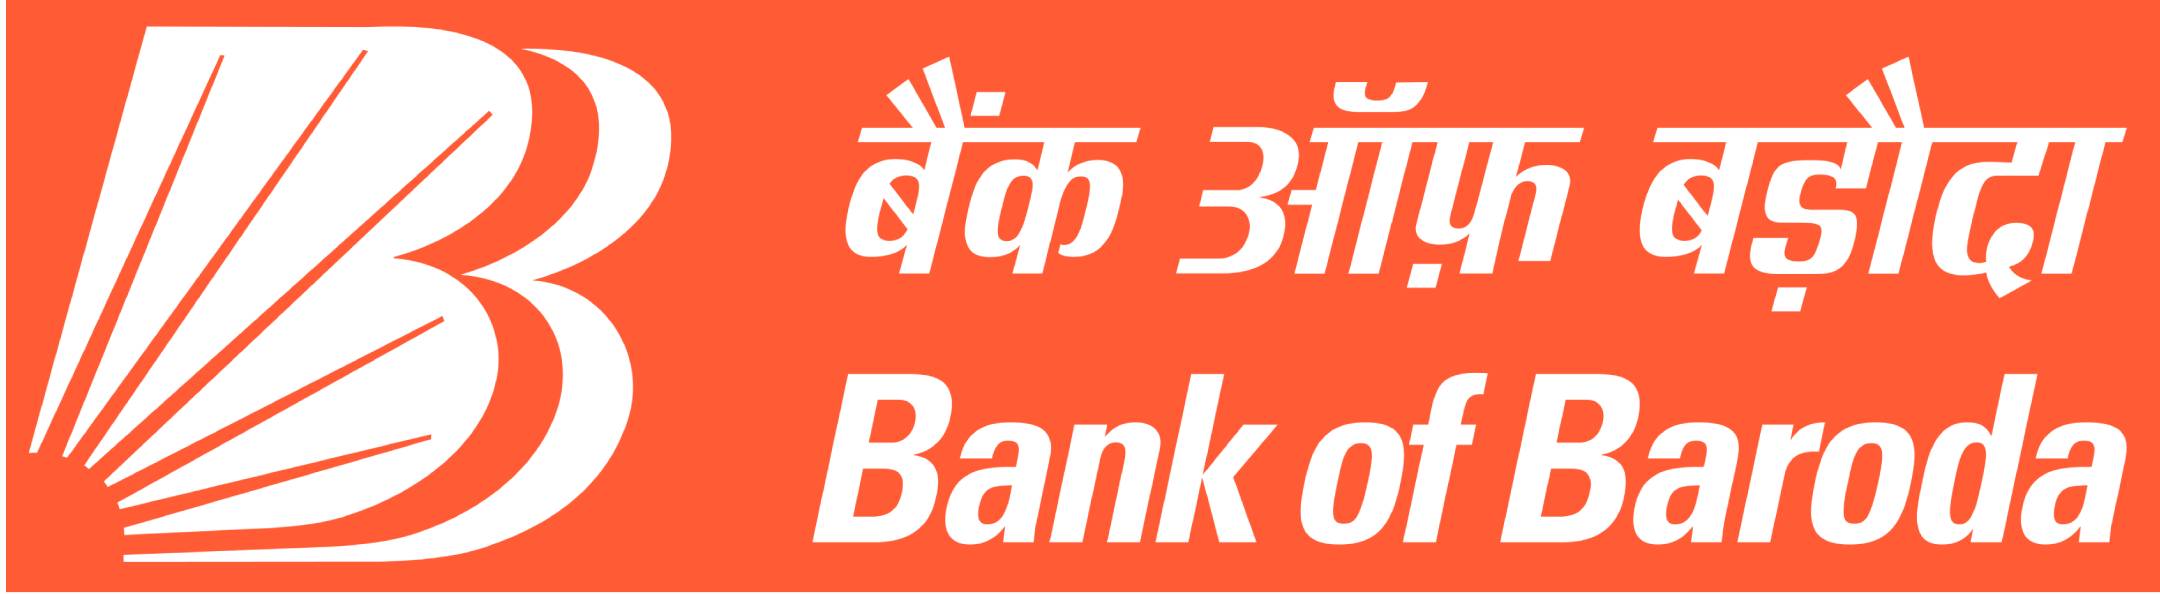 Bank_of_Baroda_logo_orange_background